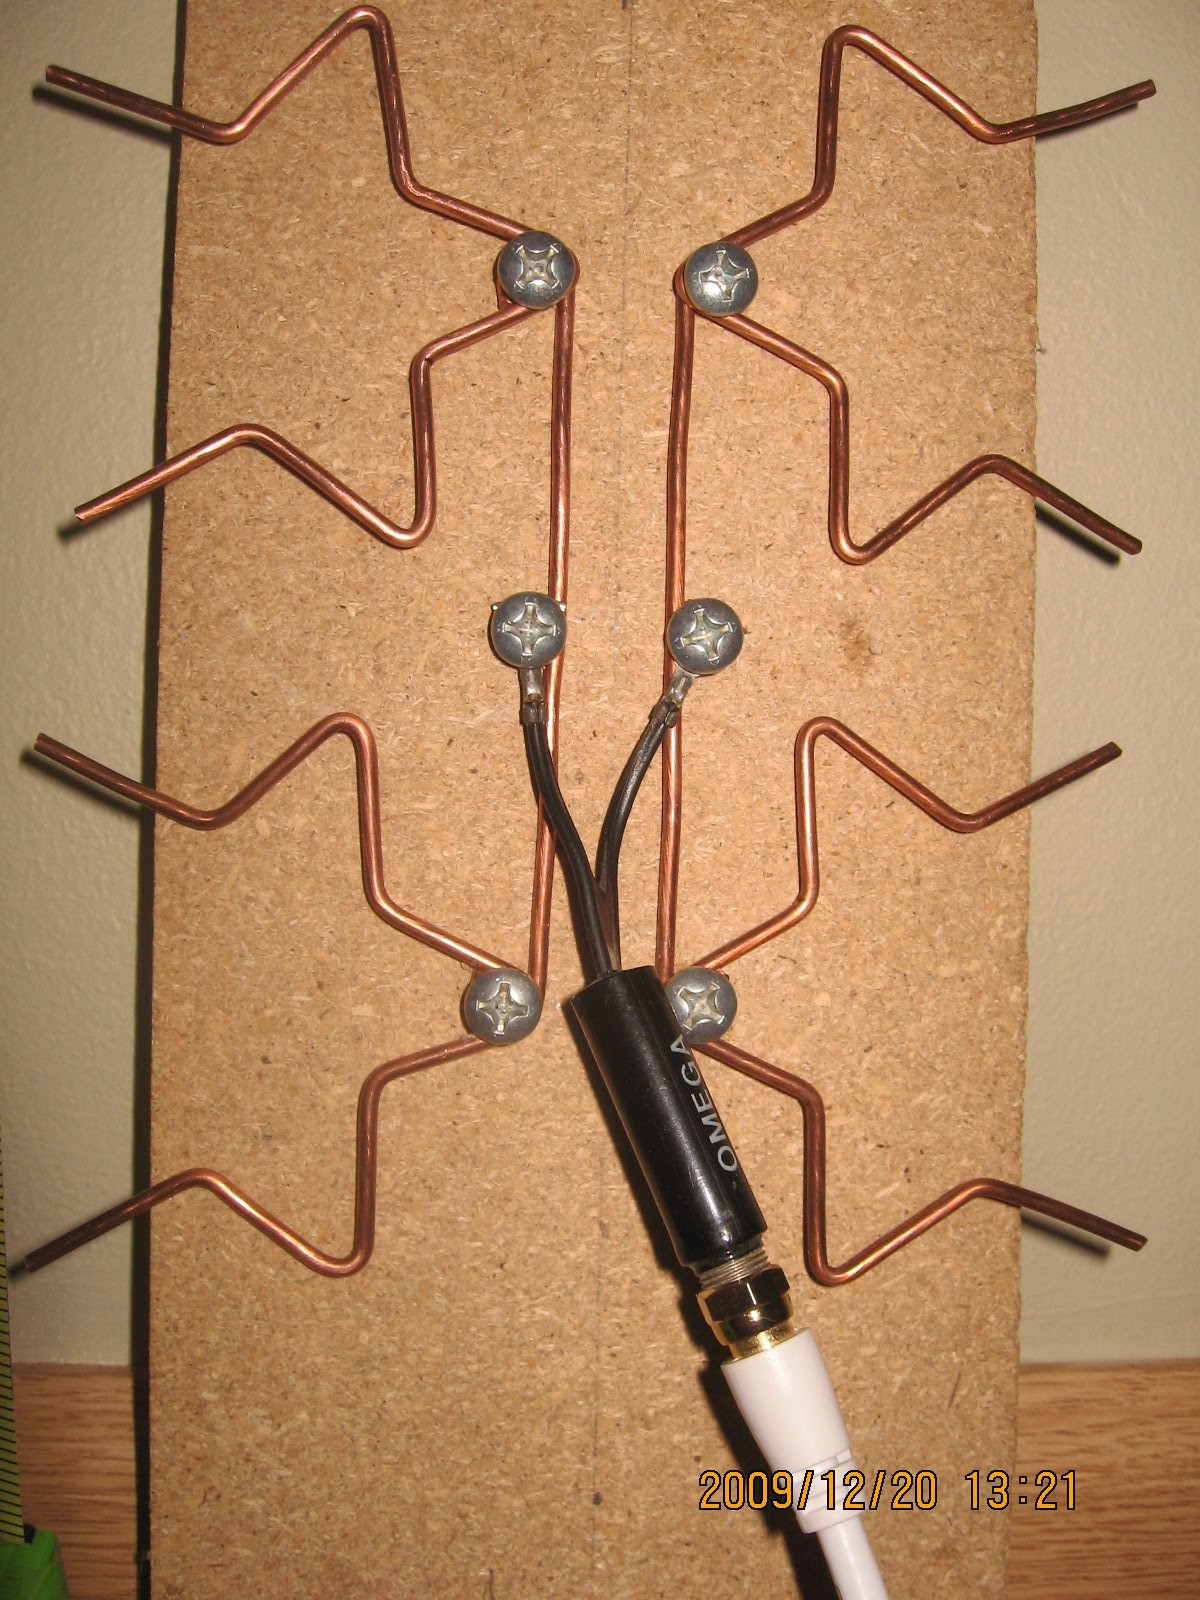 Best ideas about DIY Ota Antenna
. Save or Pin DIY Fractal Antenna Mayhem Creations Now.